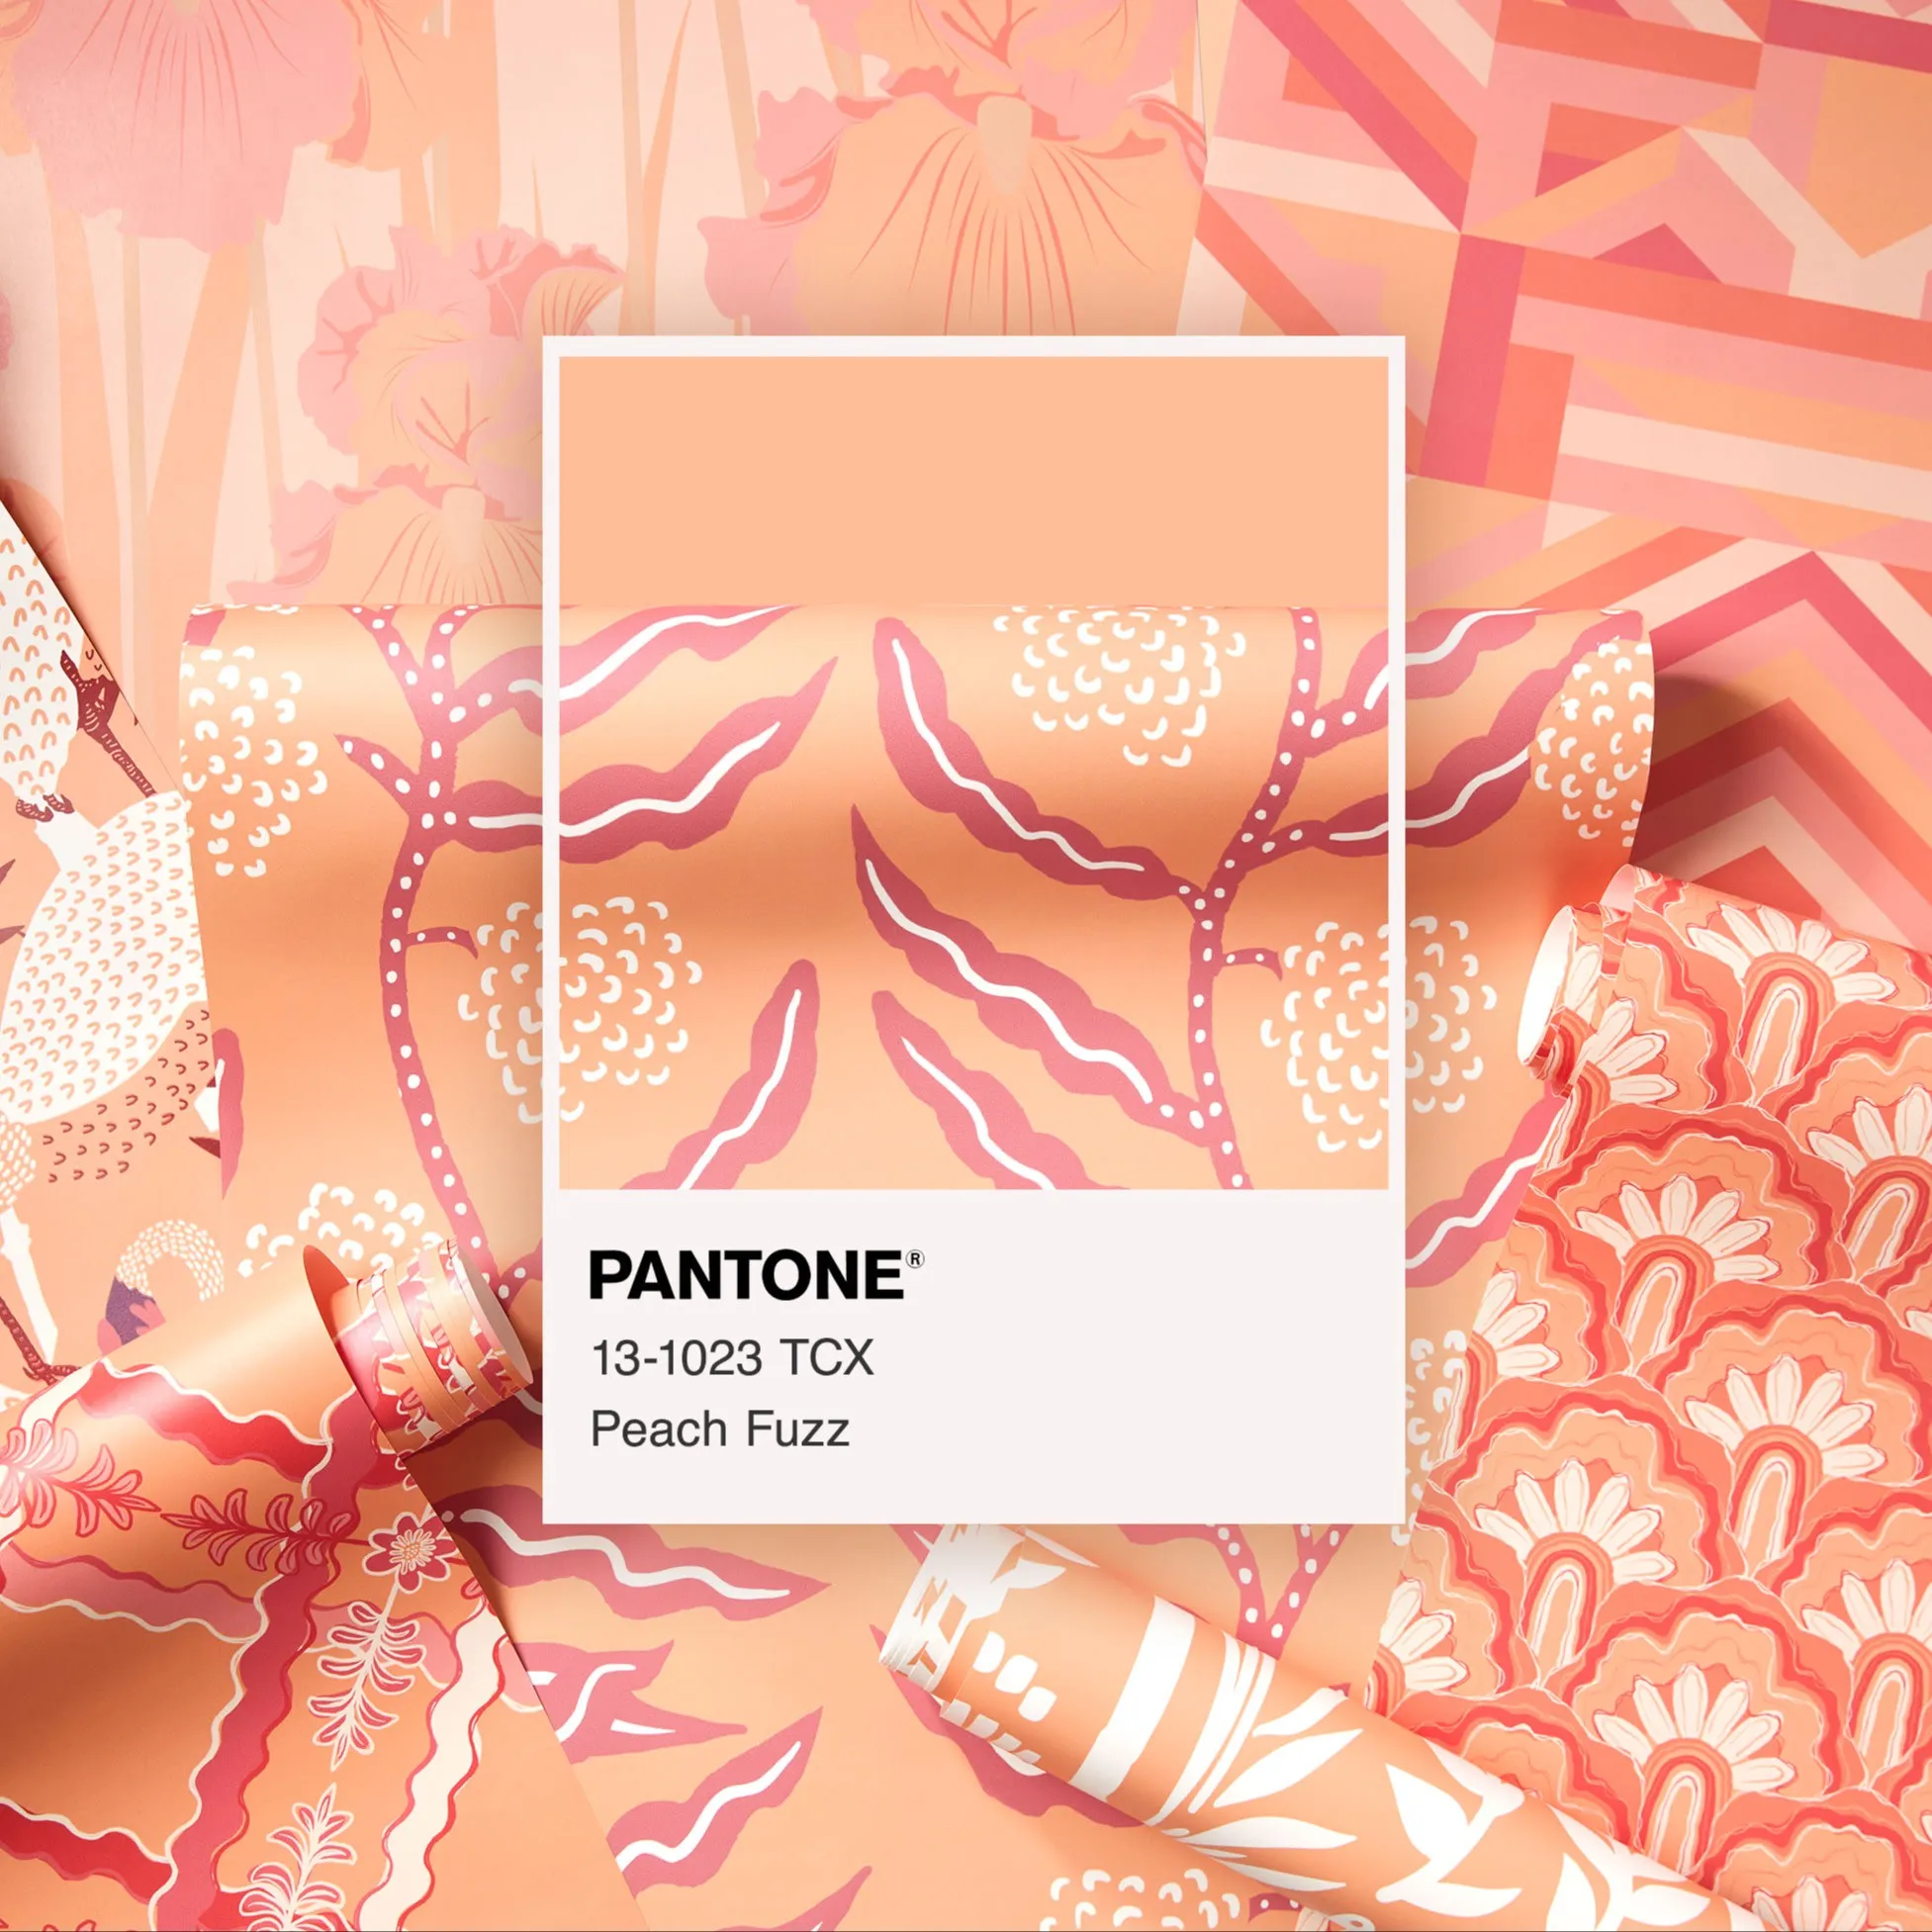 Peach colored wallpapers spread around Pantone color card